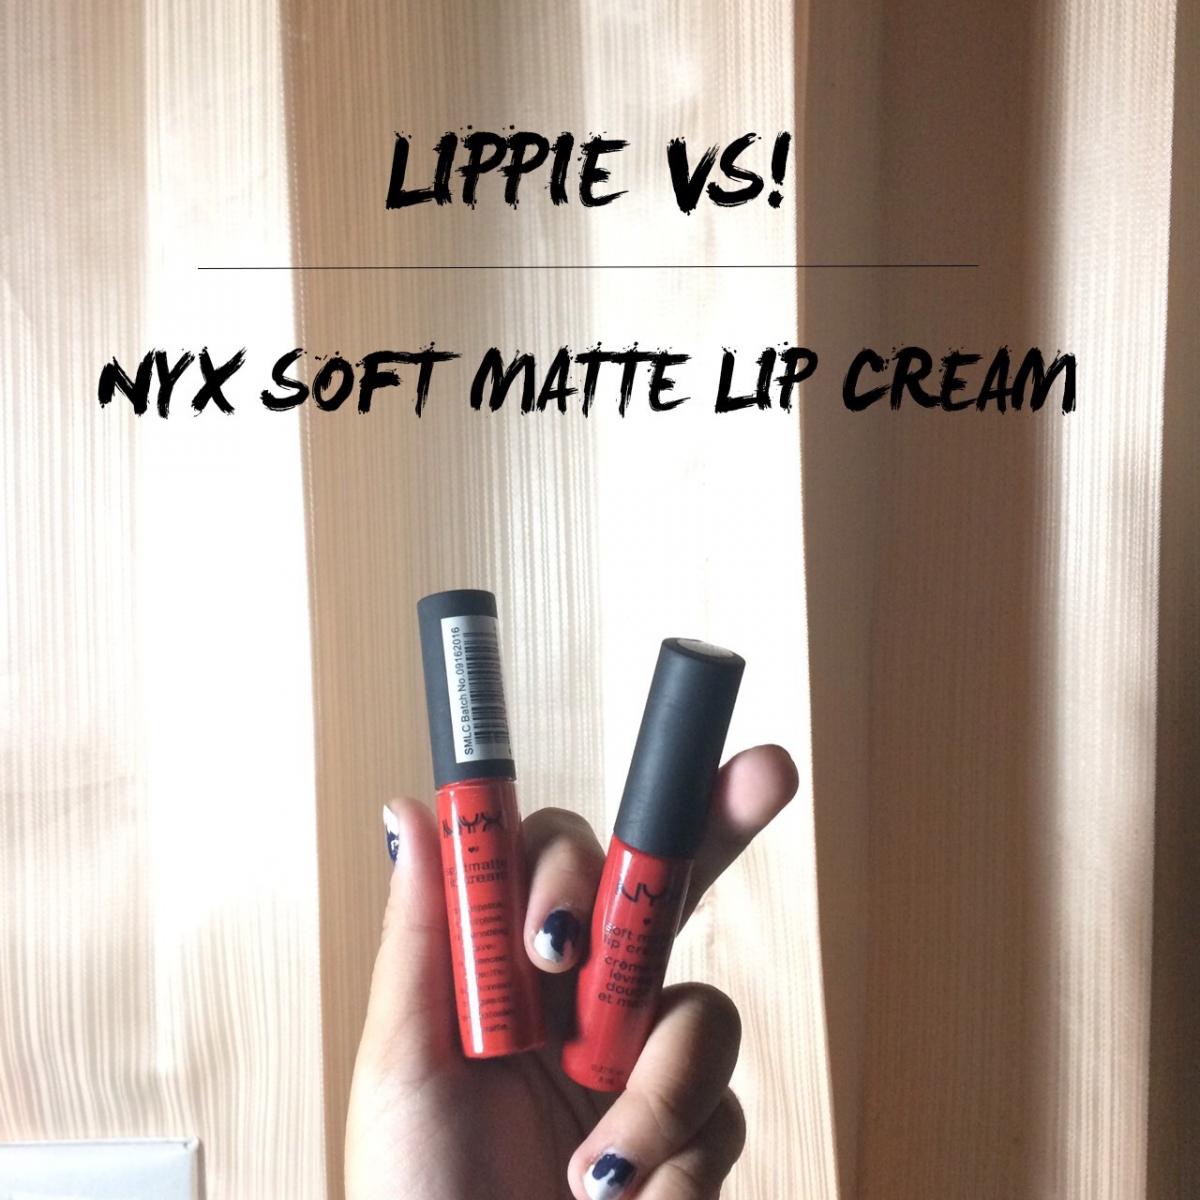 (LIPPIE VS!) NYX soft matte lip cream แท้ VS ปลอม